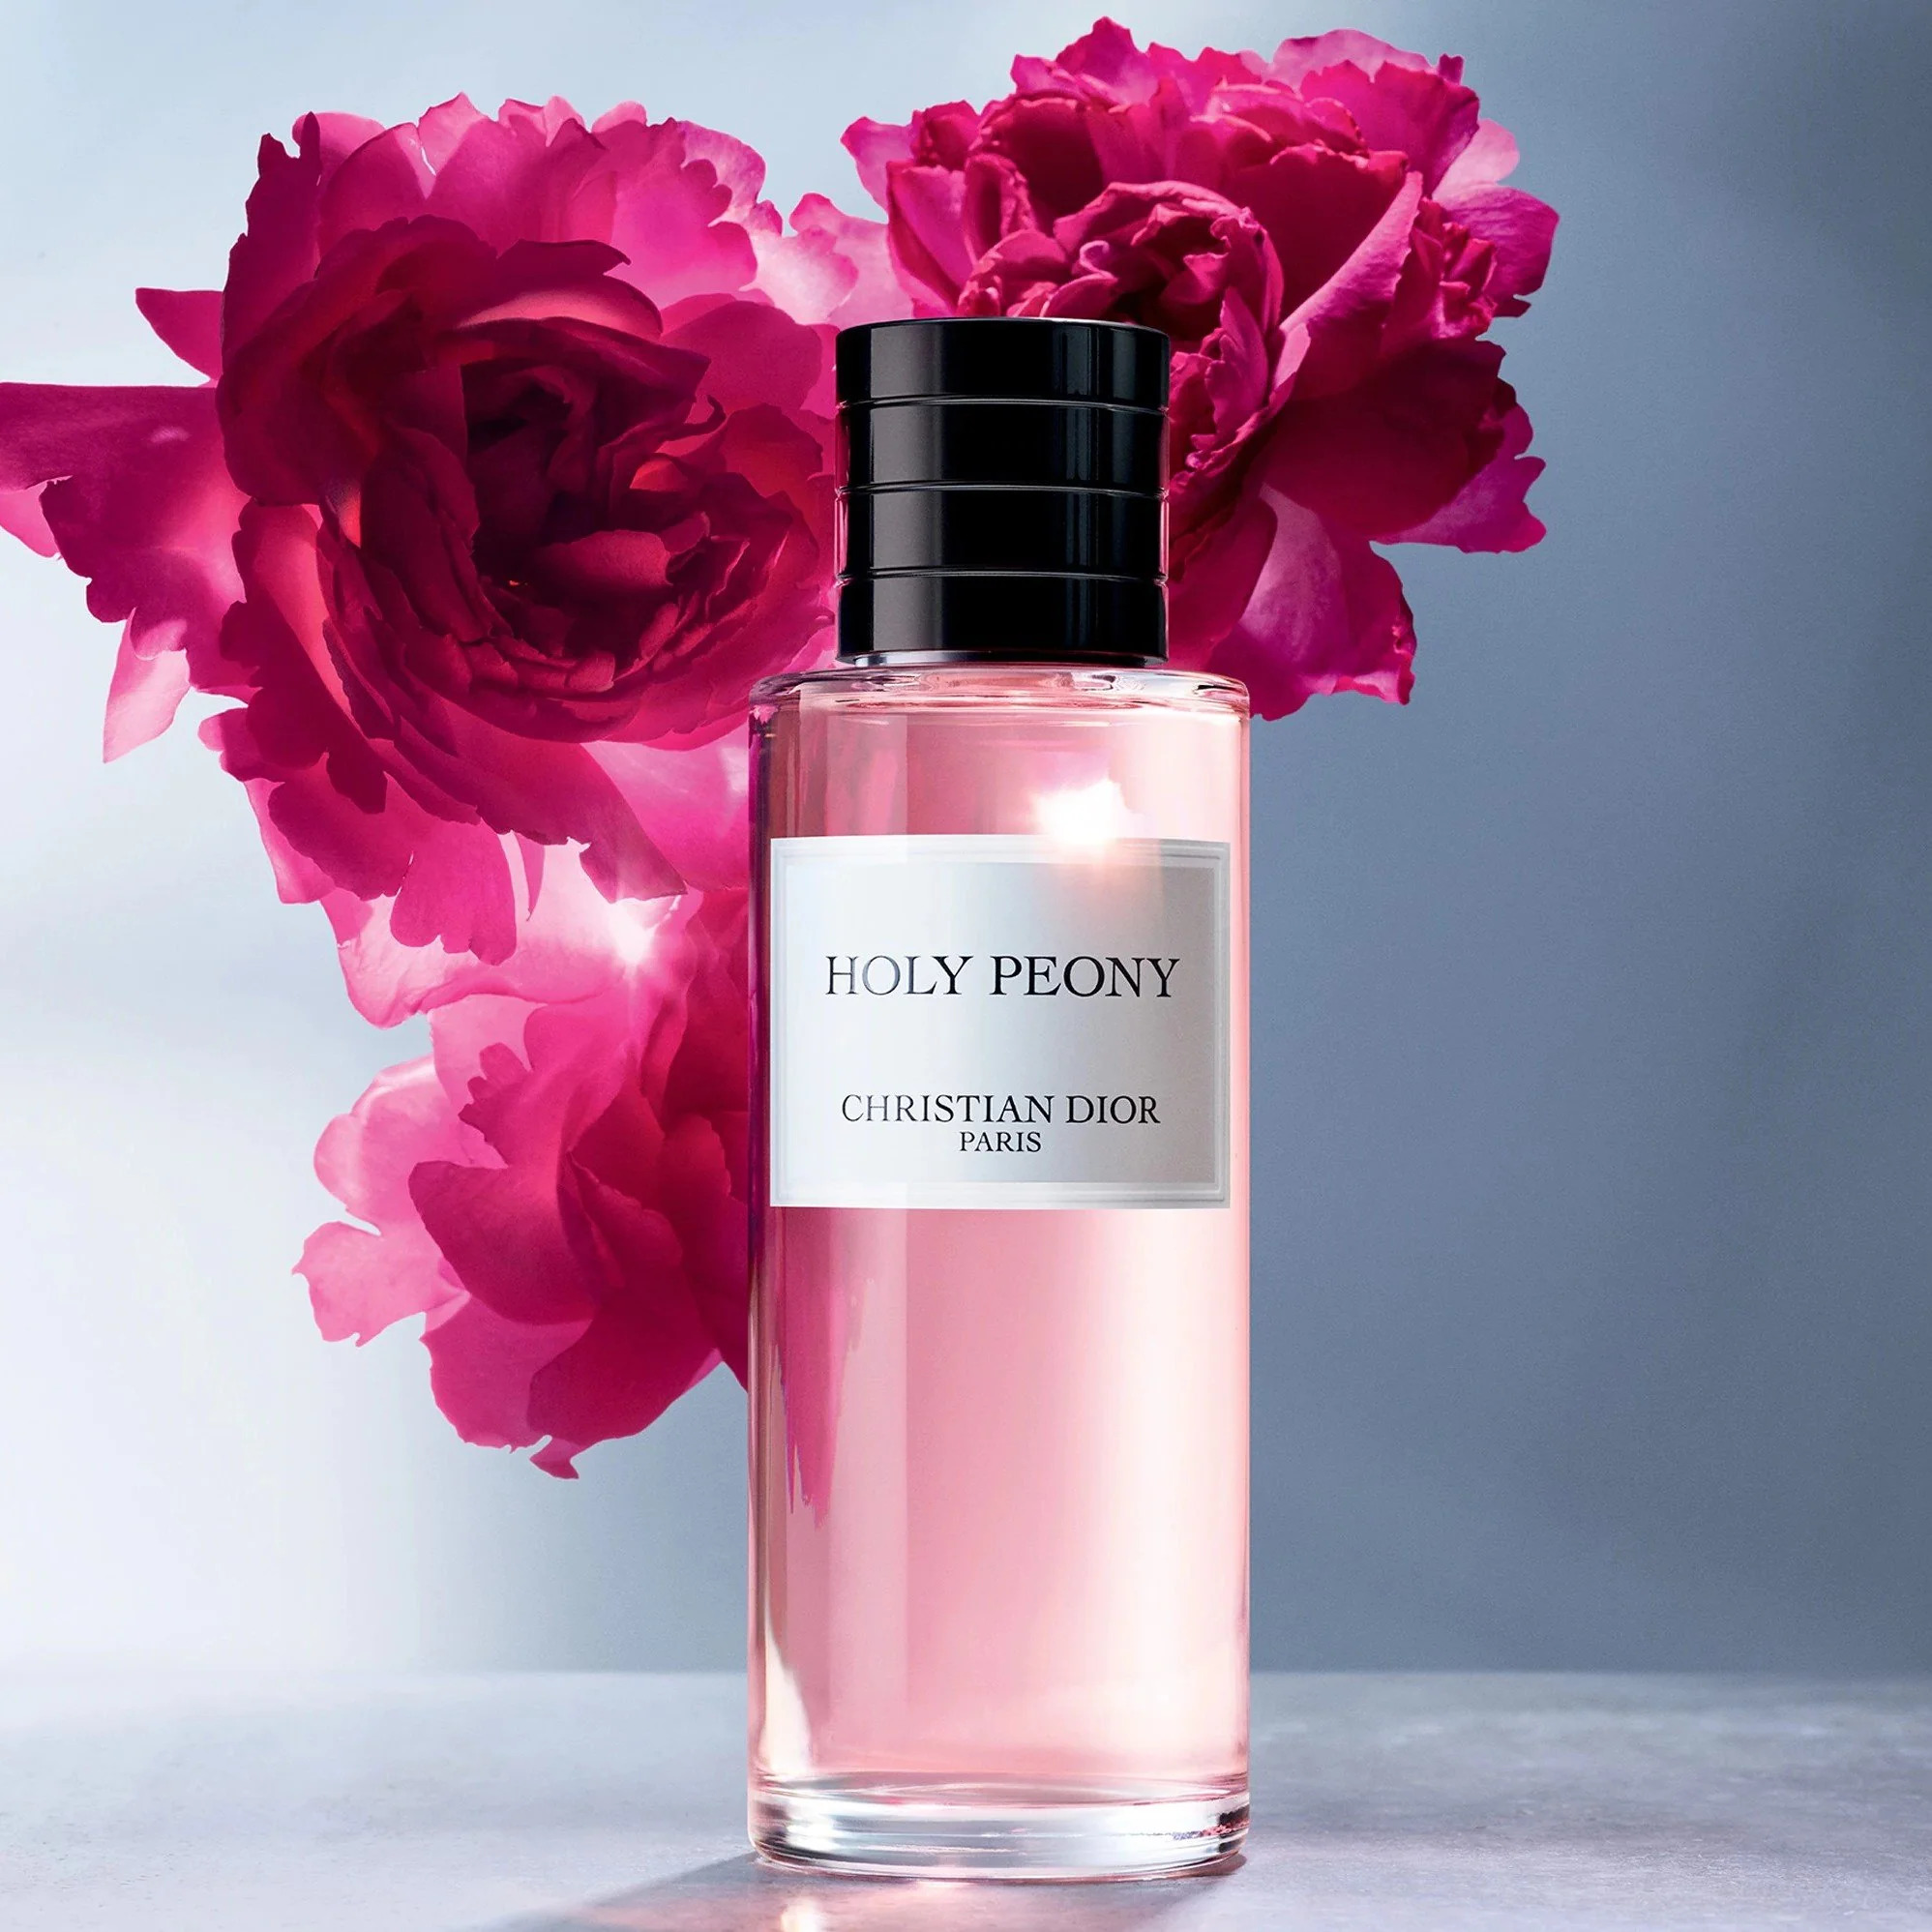 Holy Peony Perfume EDP 7.5ml น้ำหอมกลิ่นฟรุ๊ตตี้ฟลอรัล เย้ายวนใจและความสดชื่น Holy Peony เป็นกลิ่นหอมที่สร้างความสมดุลระหว่างความนุ่มนวลและความมีชีวิตชีวาของผลไม้